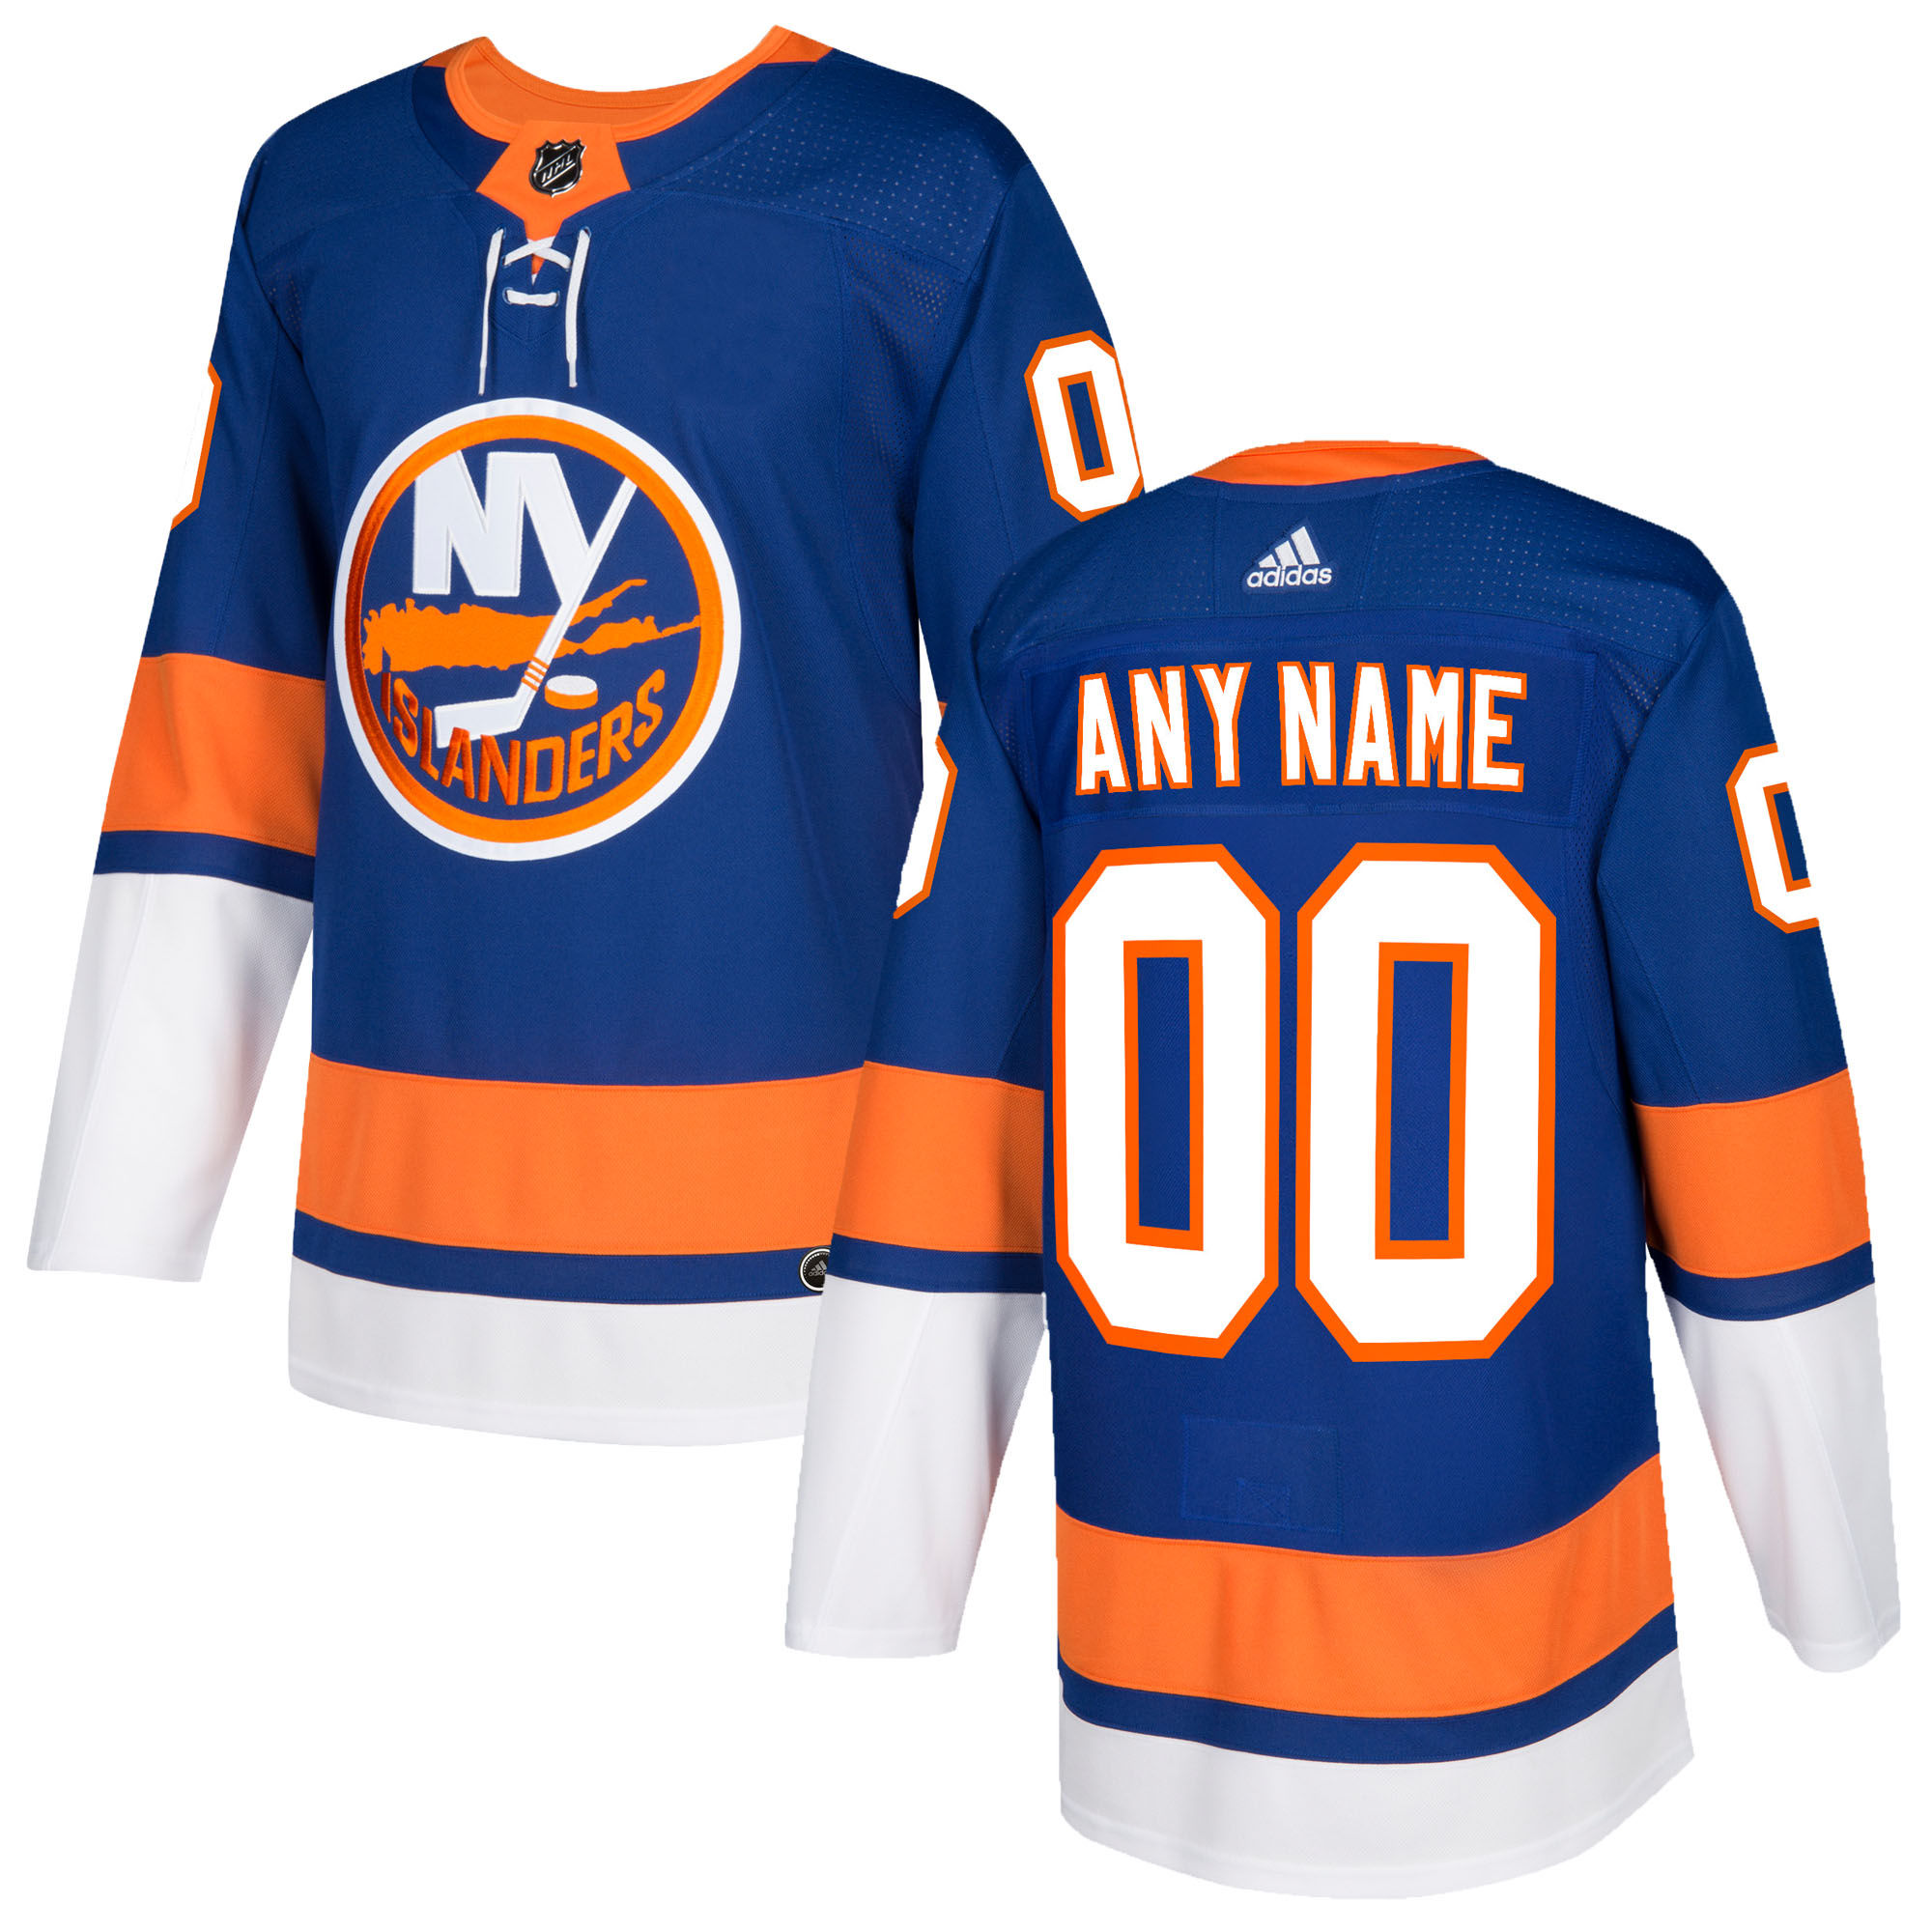 Custom Men's Adidas Men's New York Islanders Light Blue Home Hockey Stitched NHL Jersey